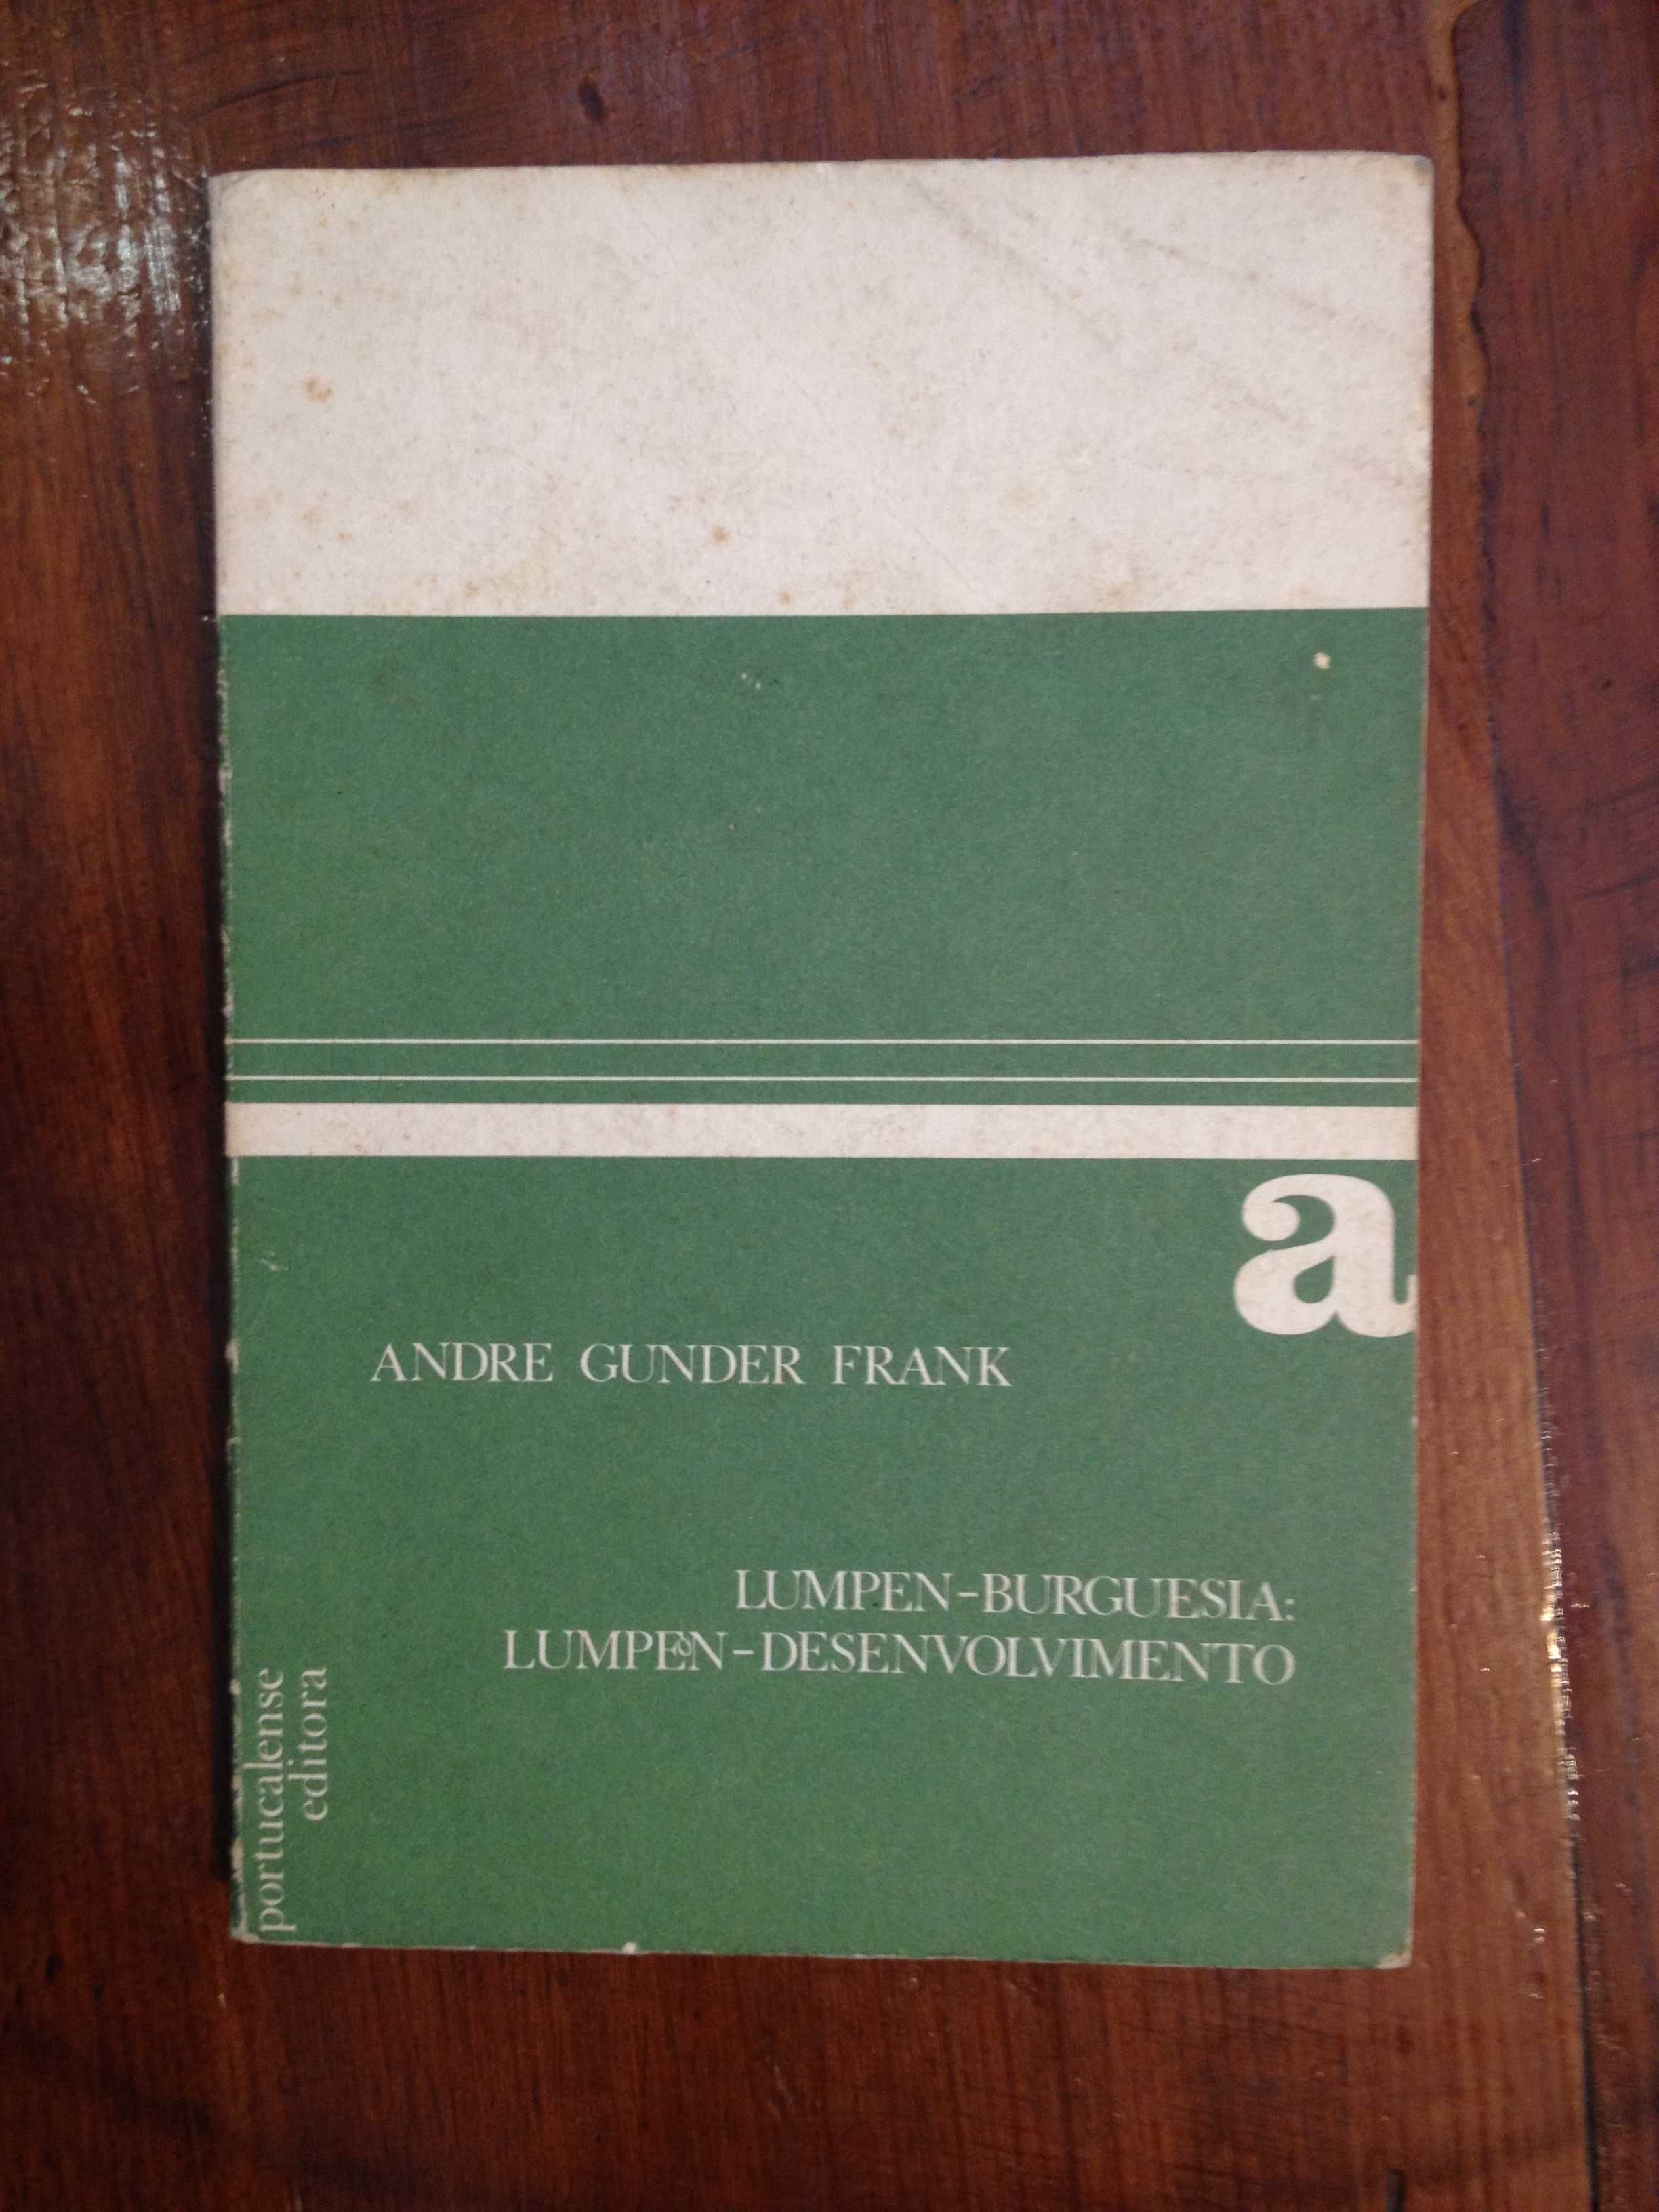 Andre Gunder Frank - Lumpen-Burguesia, Lumpen-Desenvolvimento